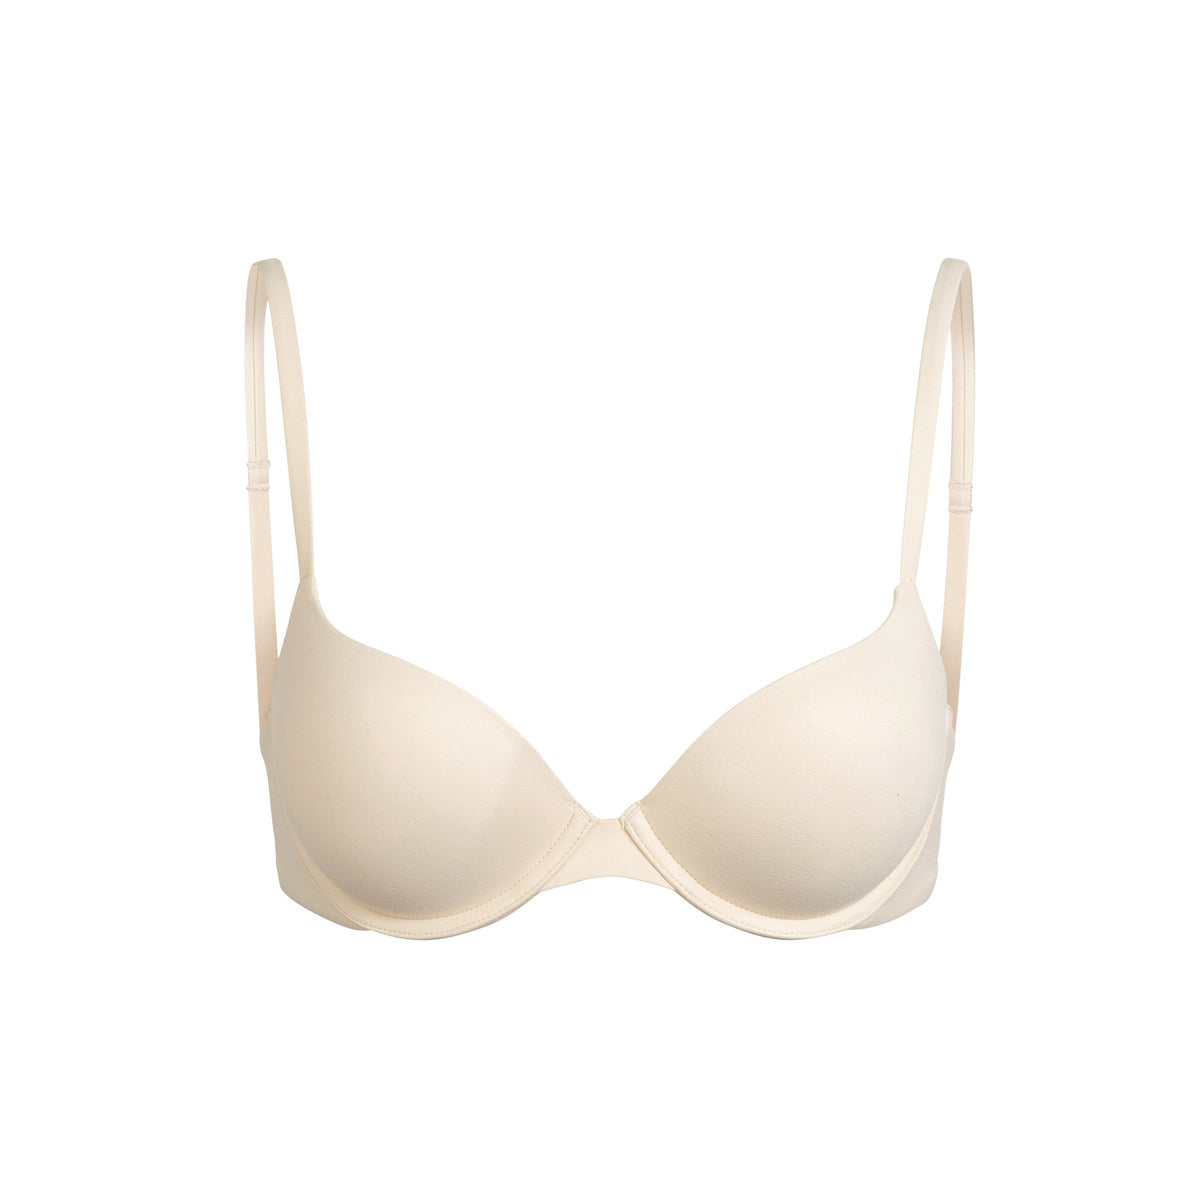 SKIMS on X: Stock up on @KimKardashian's essential bras and